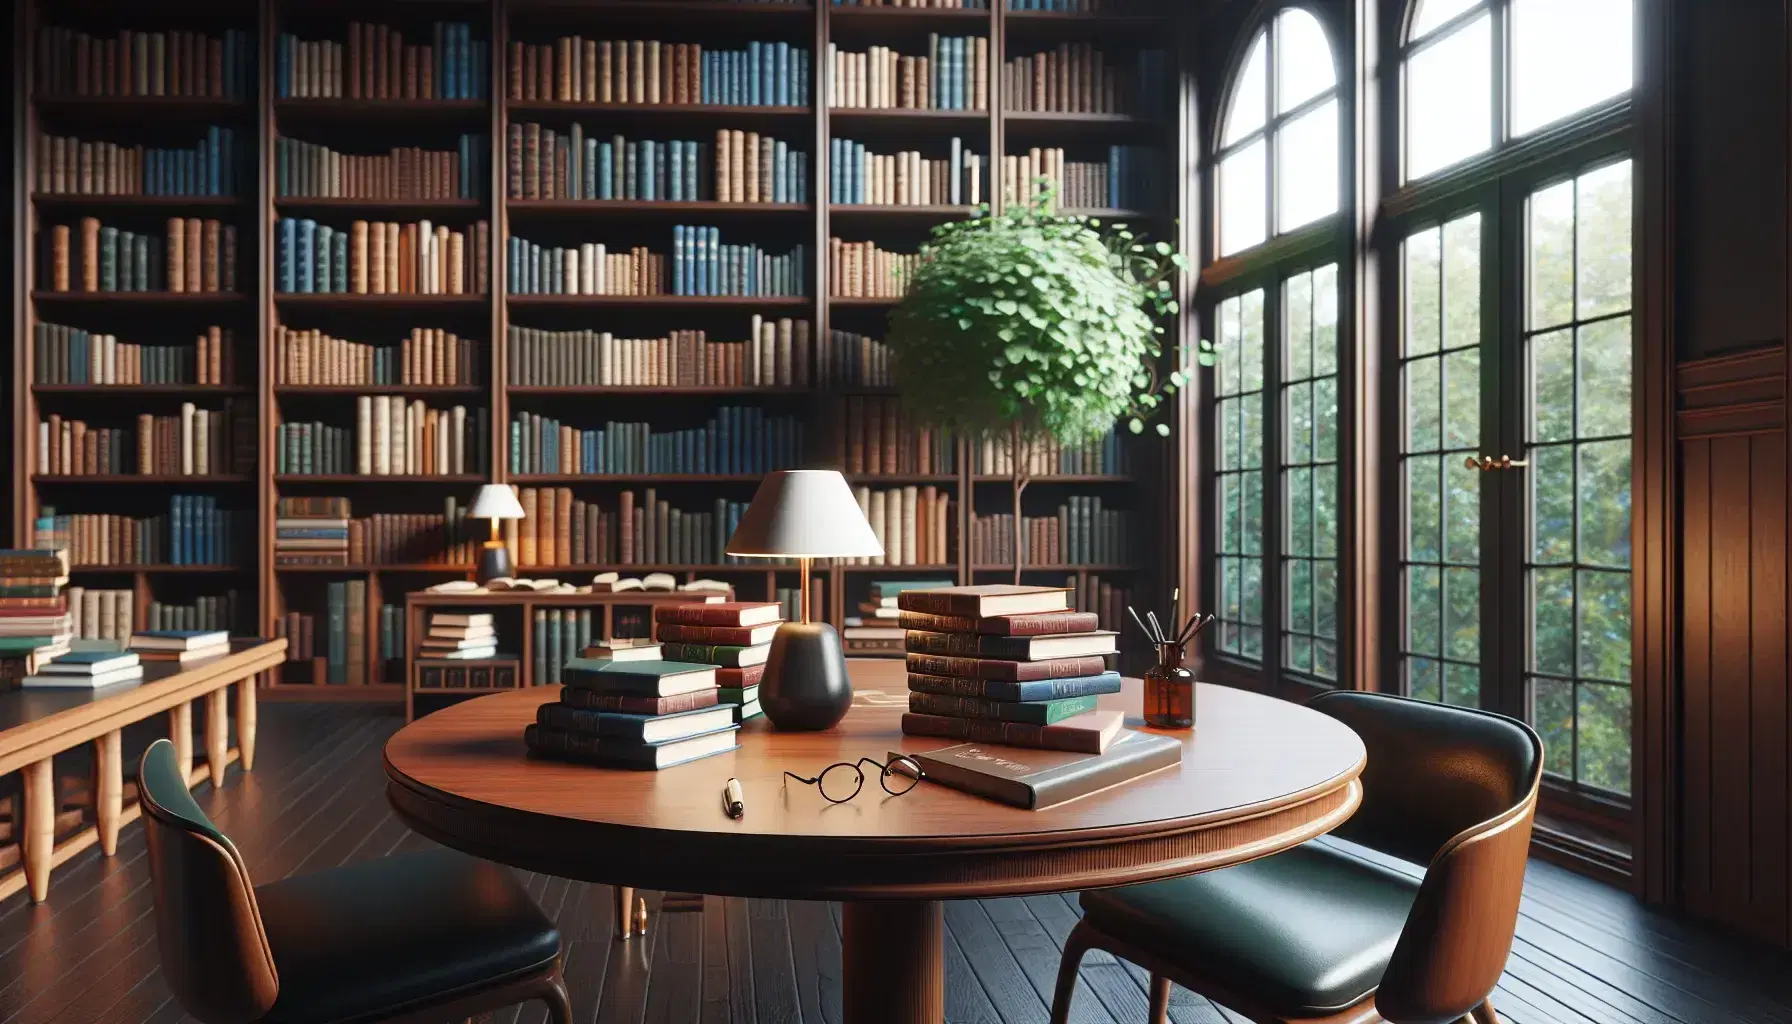 Biblioteca acogedora con estanterías de madera oscura llenas de libros, mesa central con libros apilados, gafas y lámpara, junto a ventana con vista a árboles.